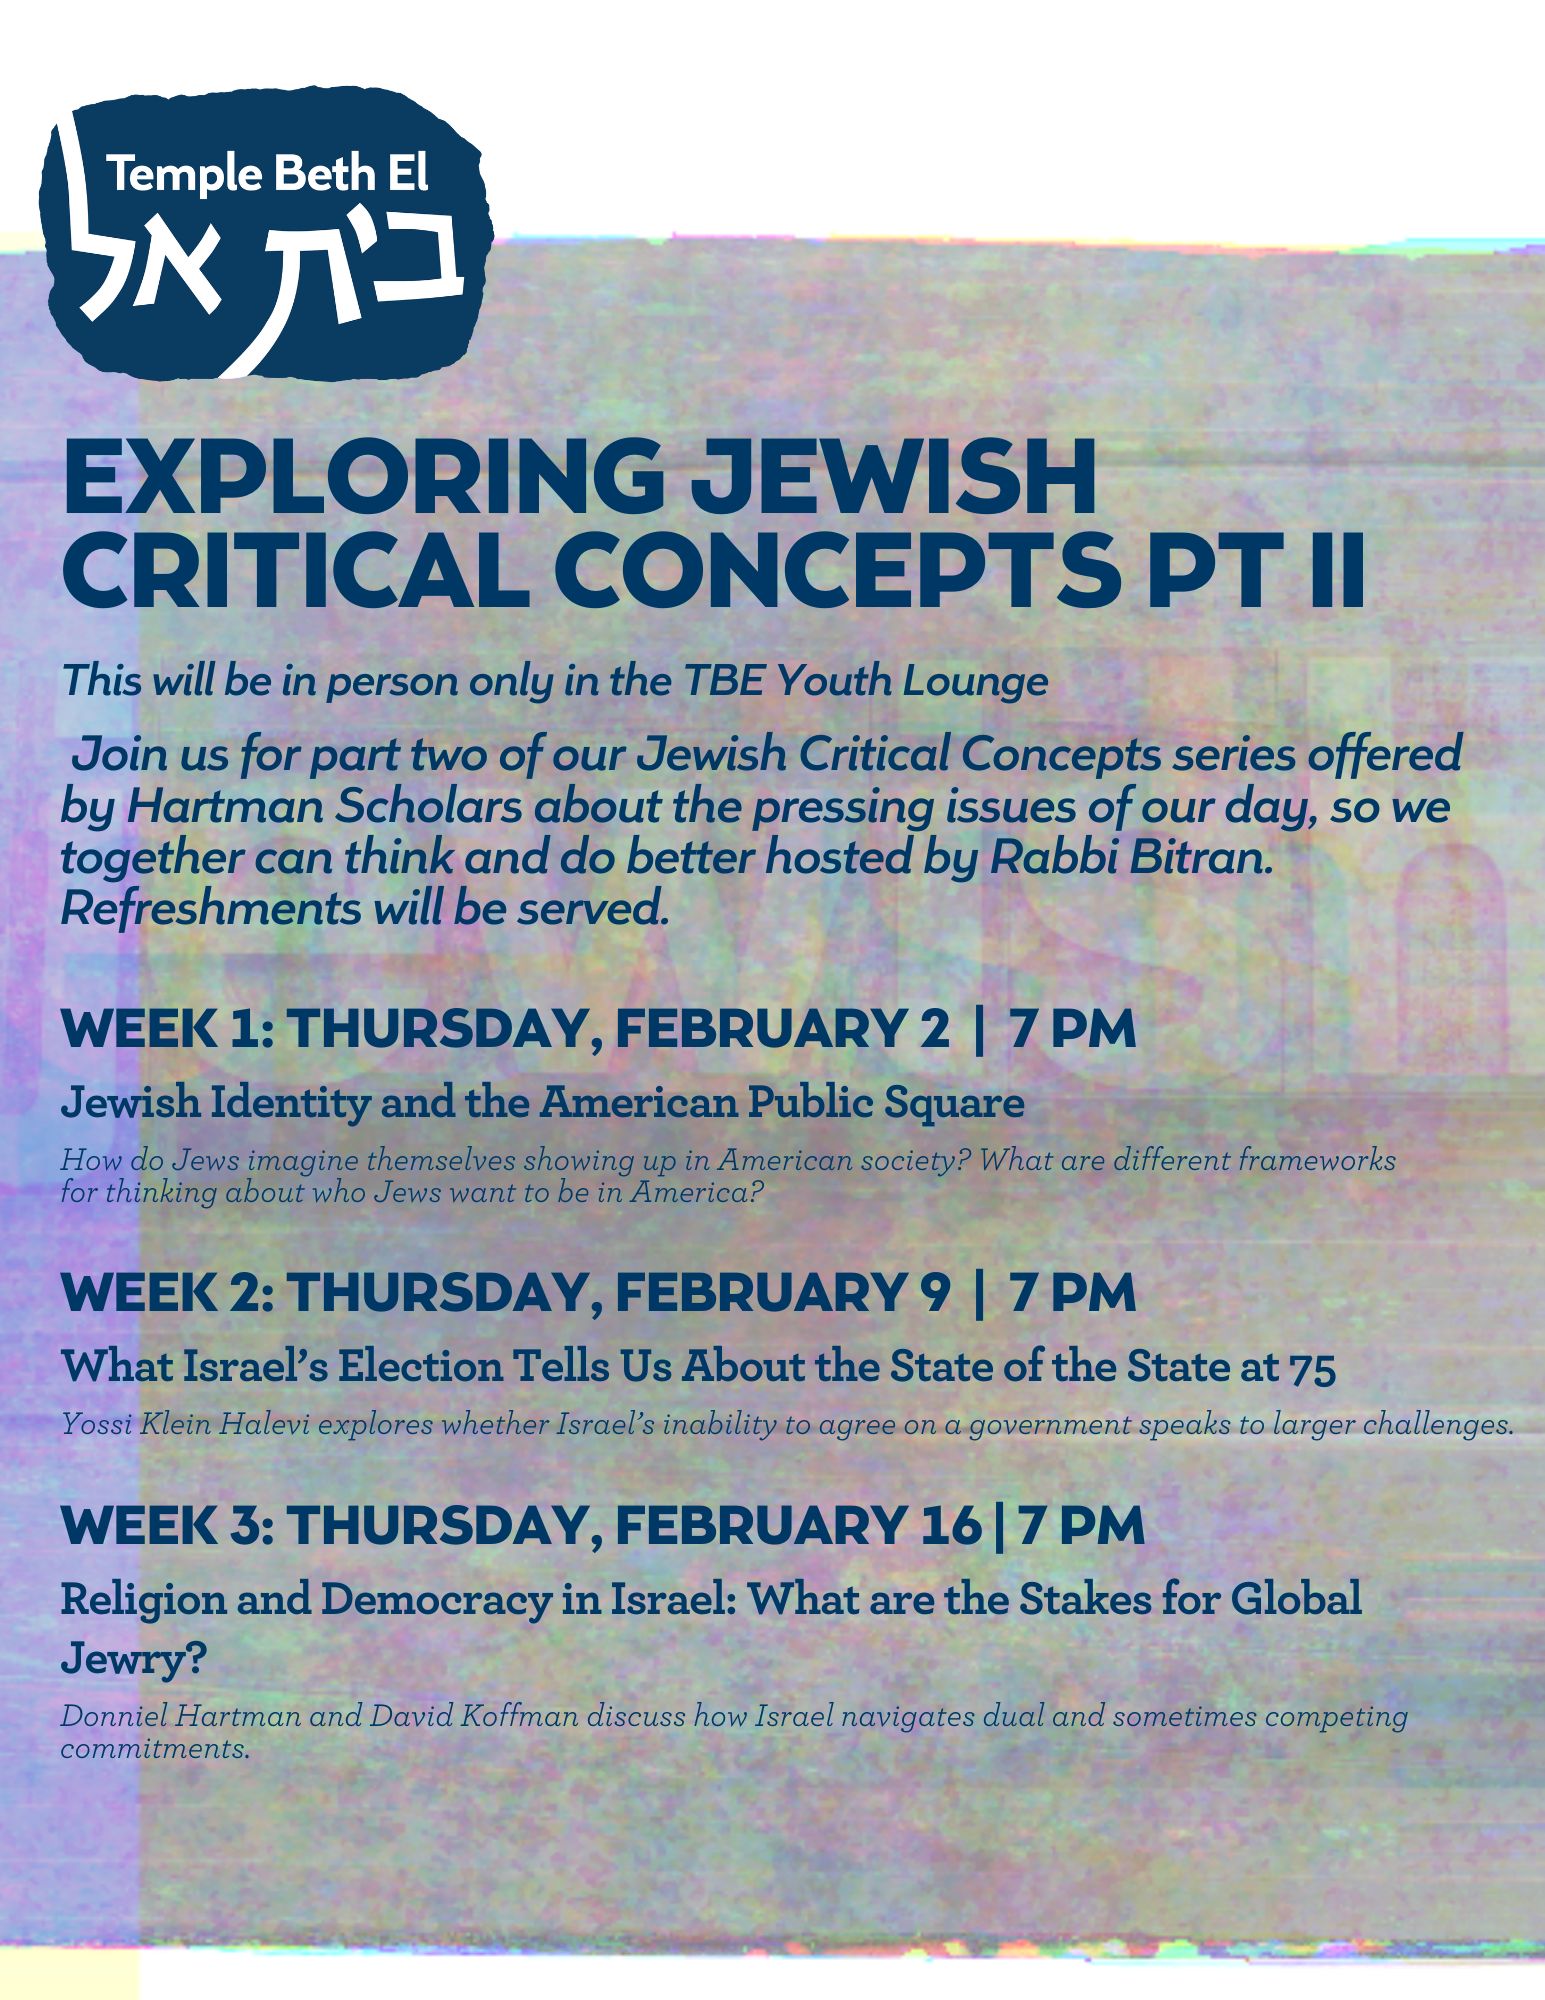 Exploring jewish critical concepts pt II : Jewish Identity and the American Public Square